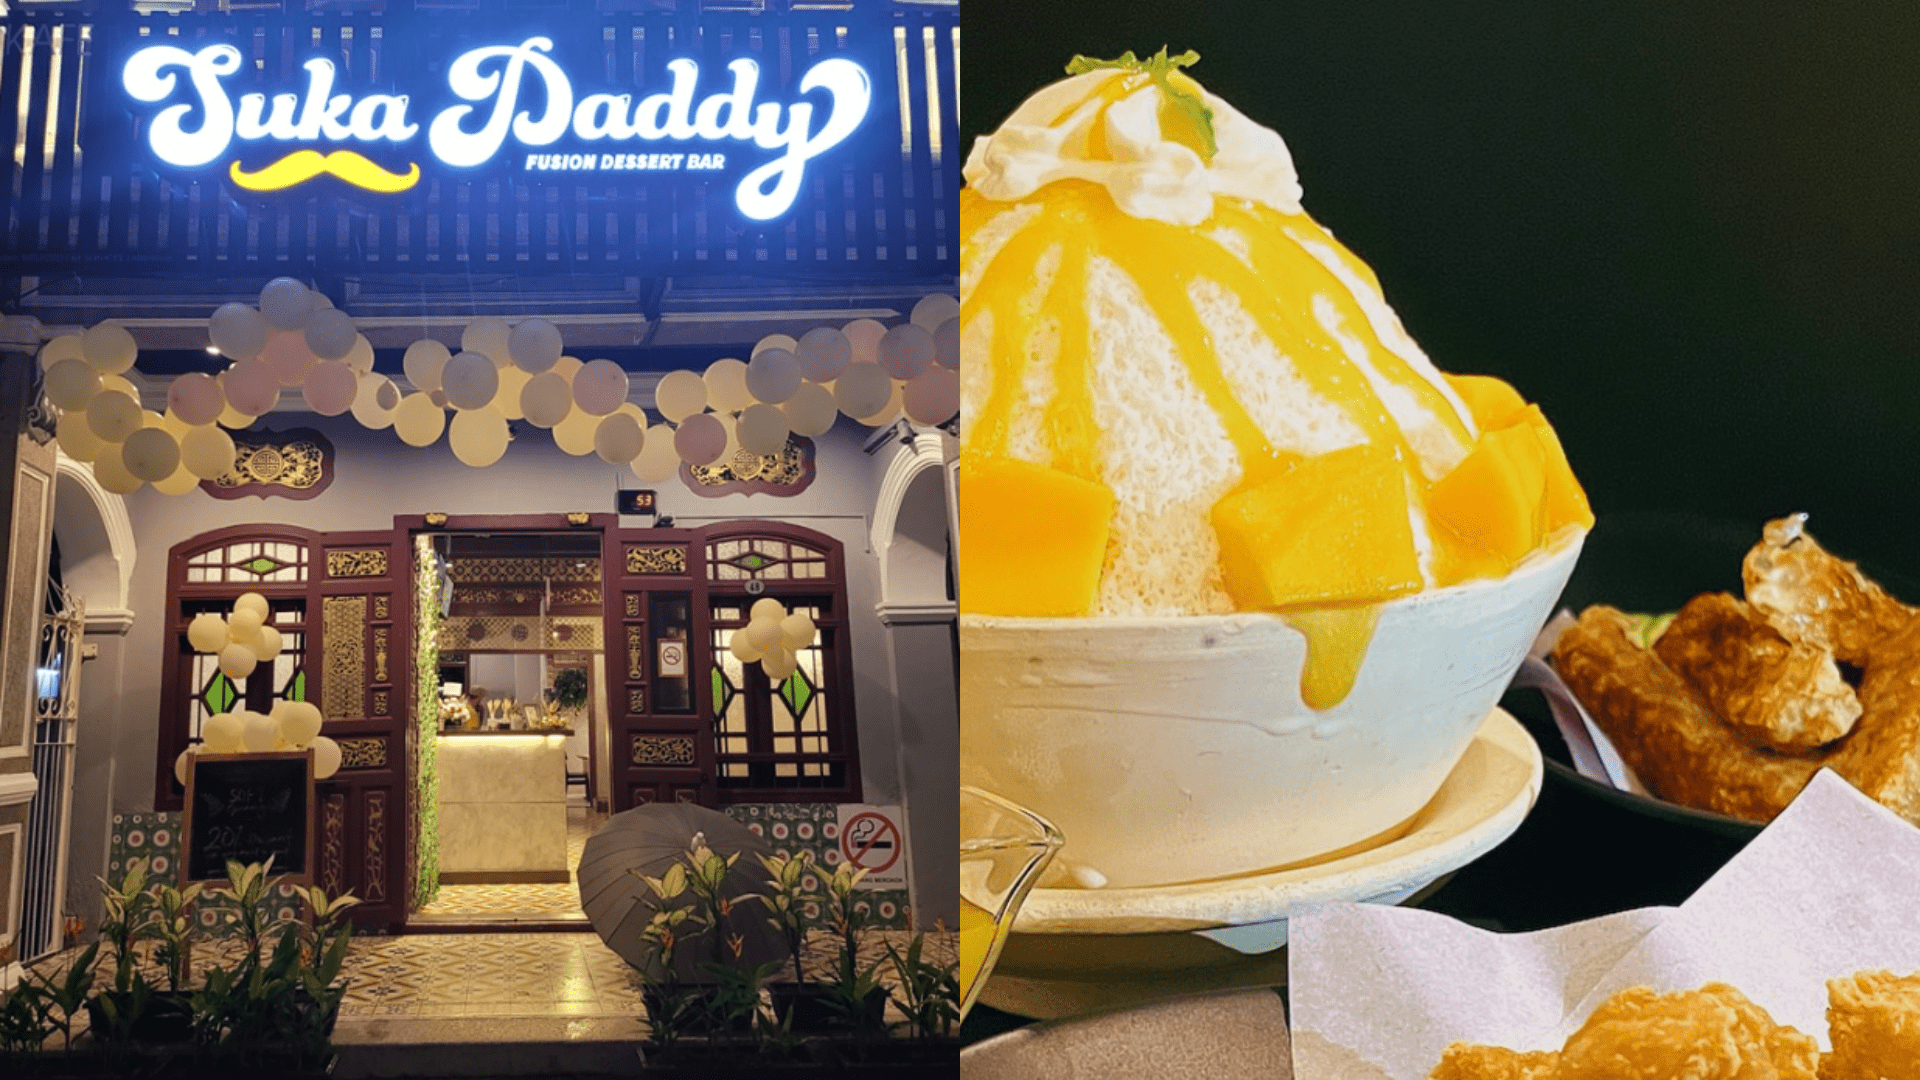 Suka Daddy Bingsu Dessert Cafe